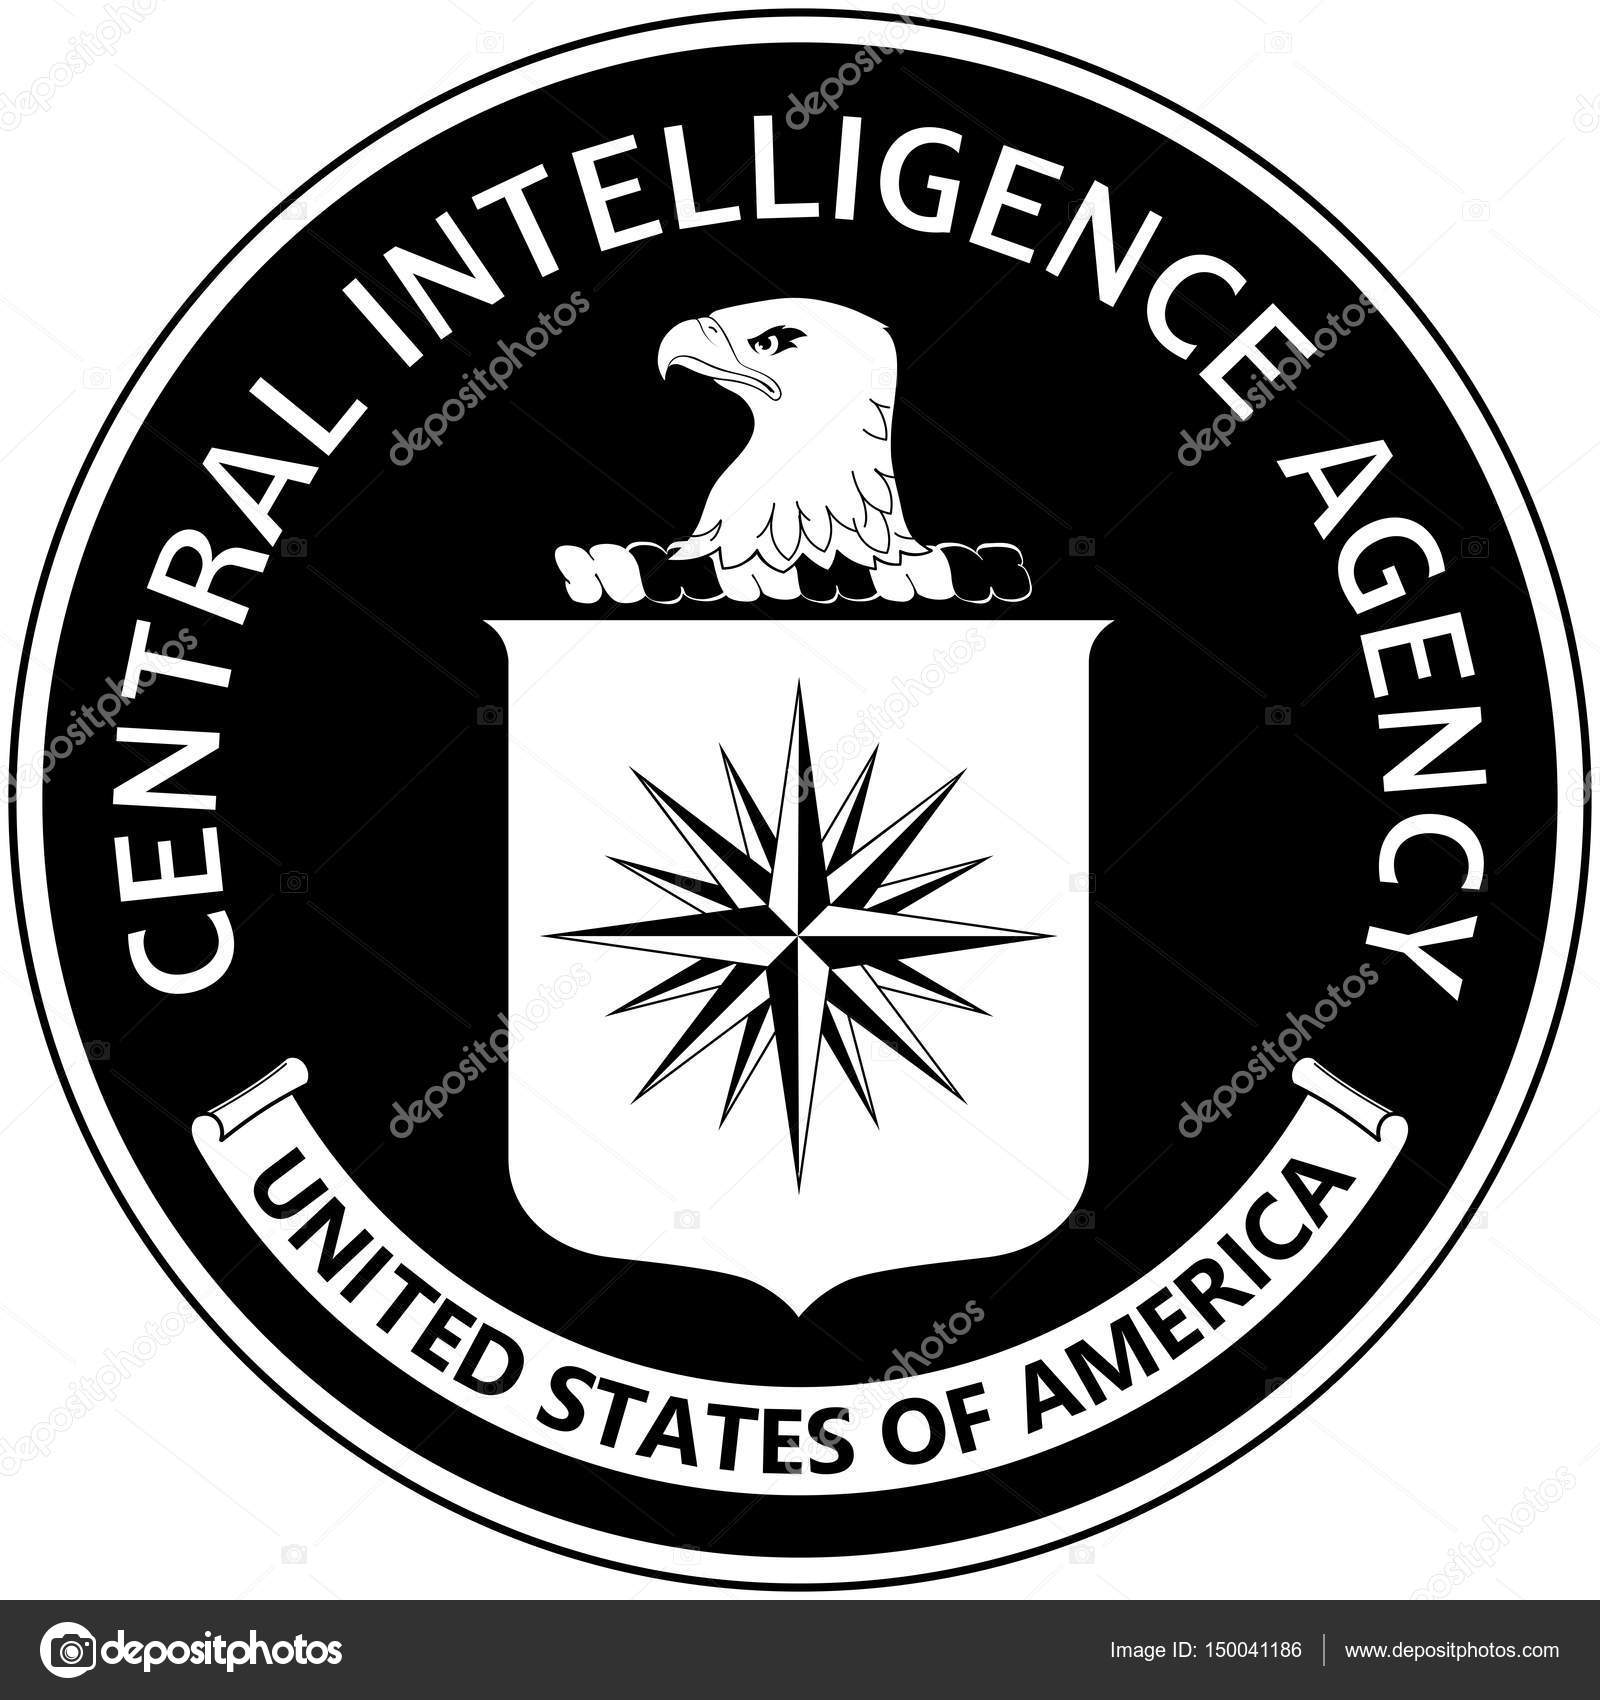 central-intelligence-agency-stock-vector-cubart-150041186